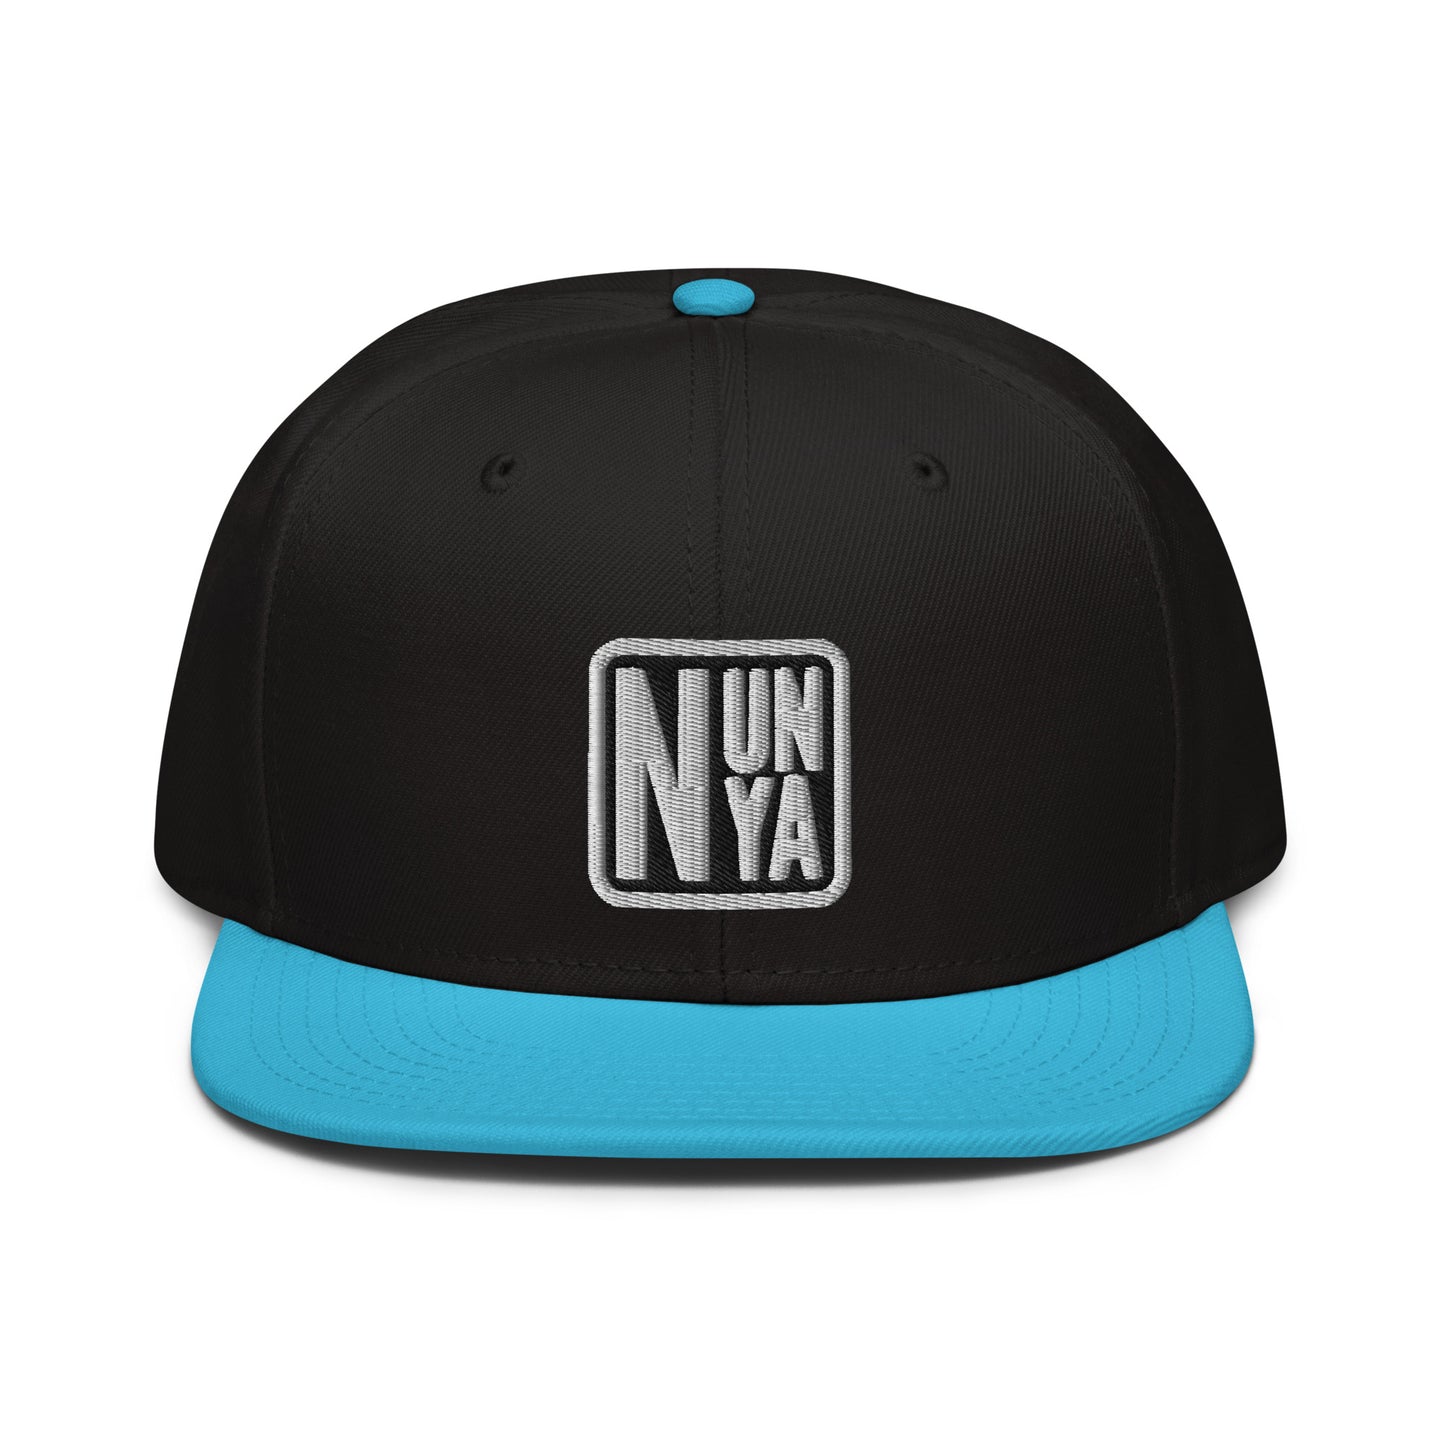 Nunya (w) Snapback Hat